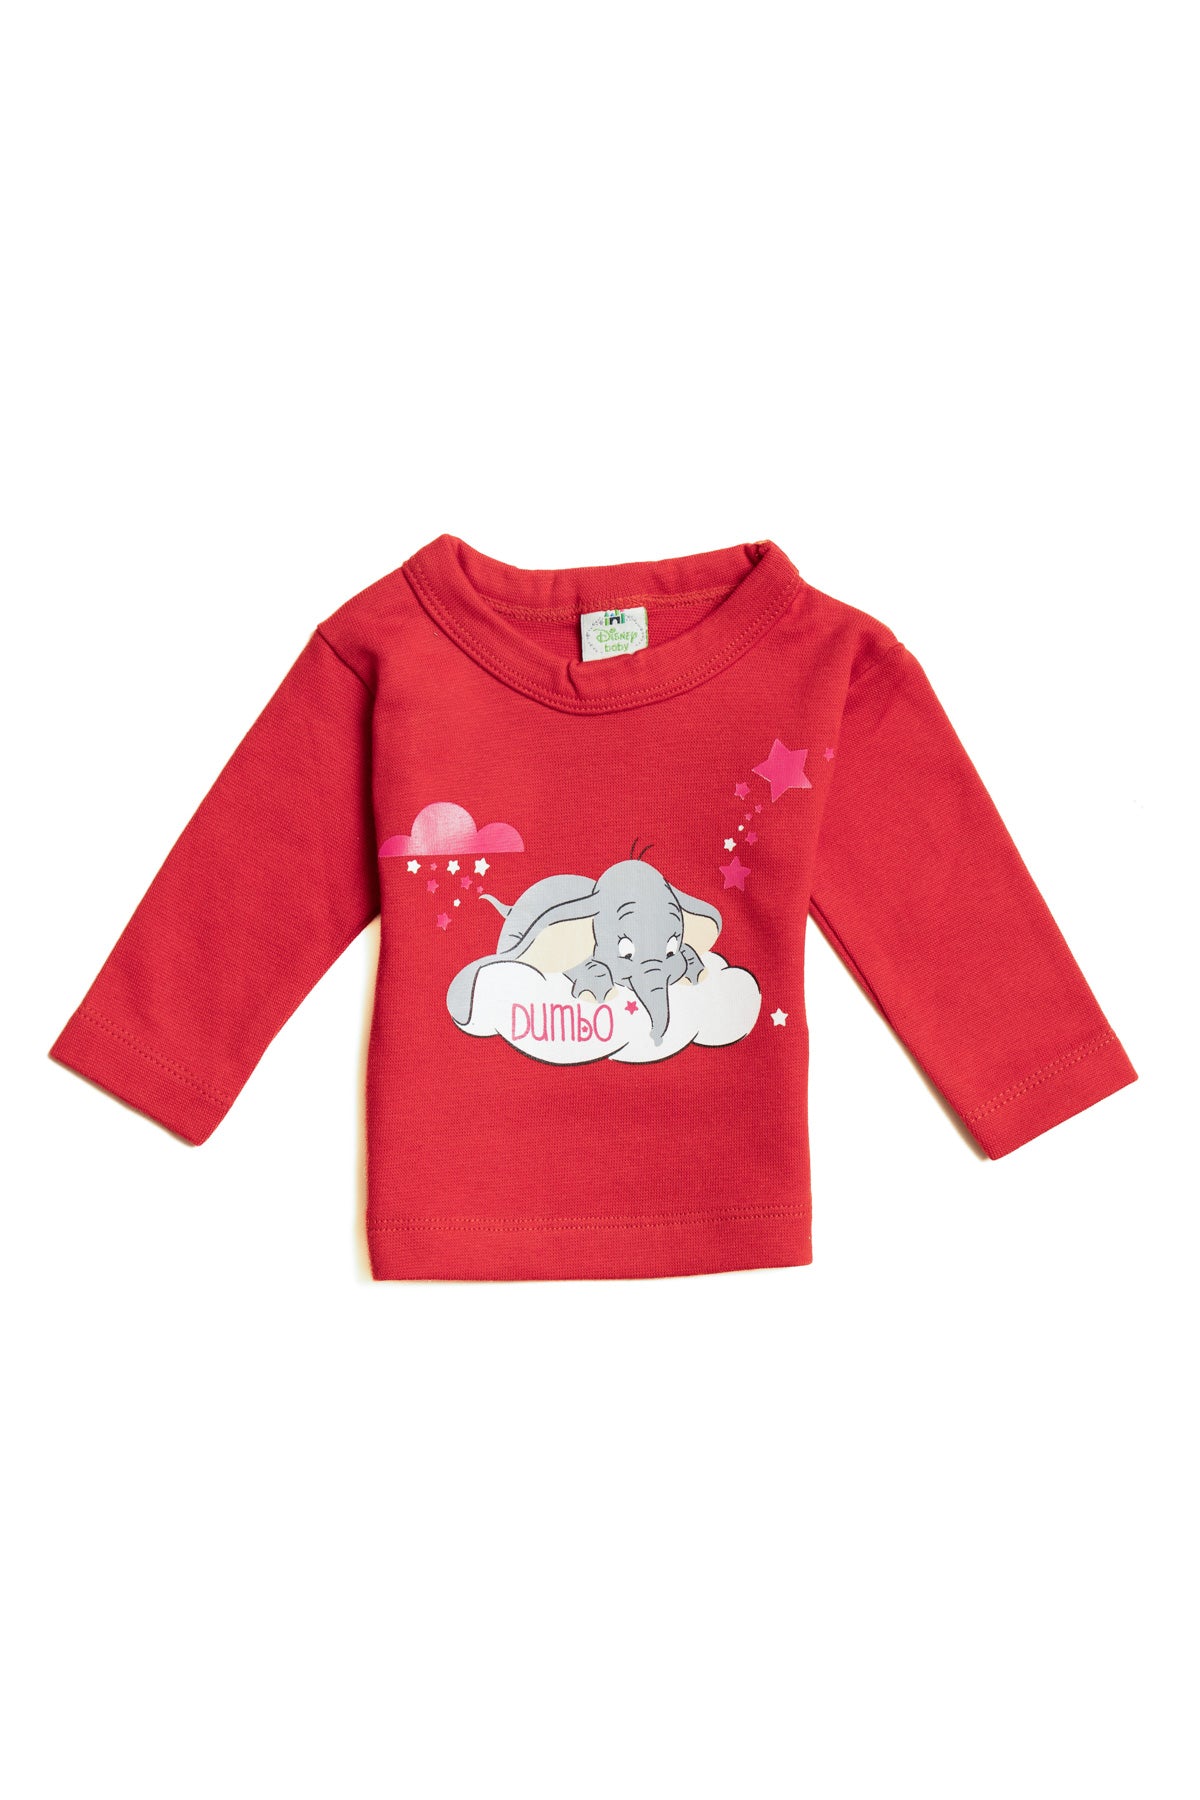 T-Shirt Baby Dumbo sleeve 4098-4082